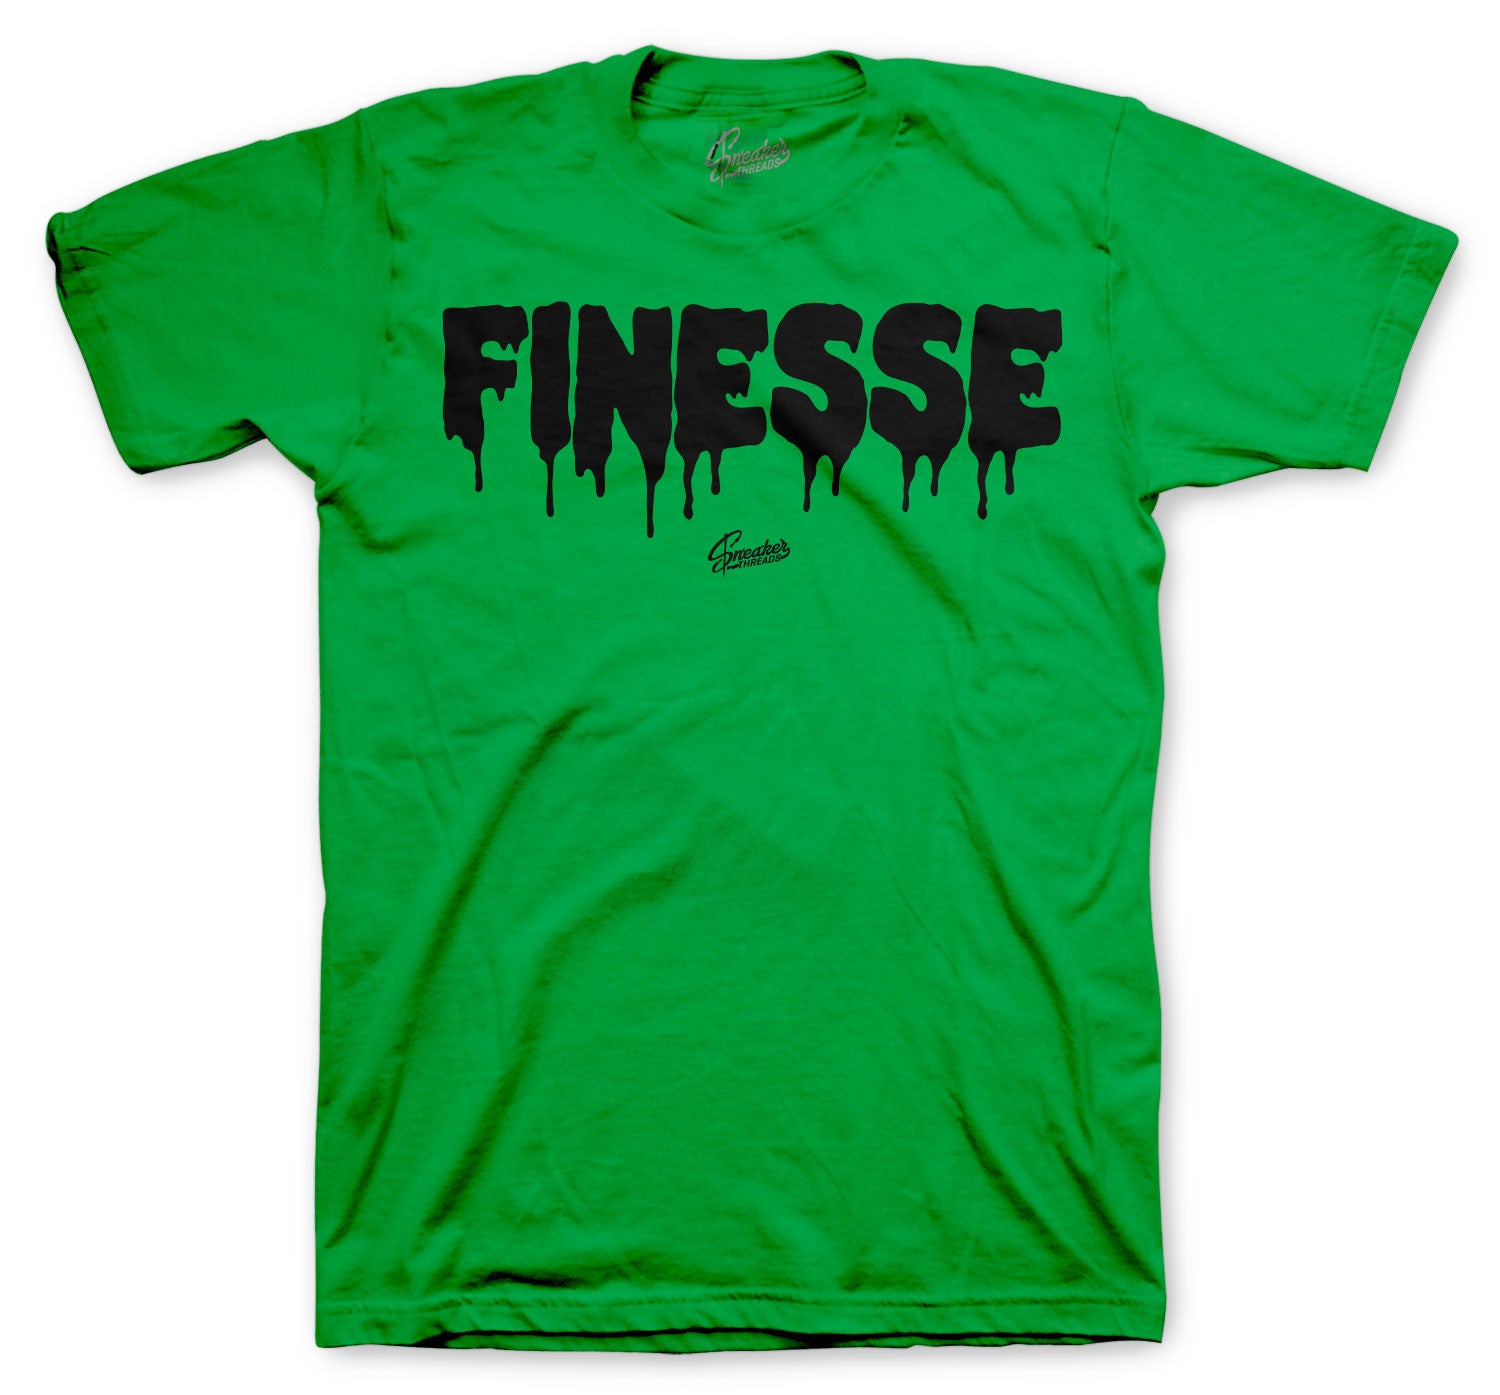 Finesse T-Shirt - Retro 3 Pine Green